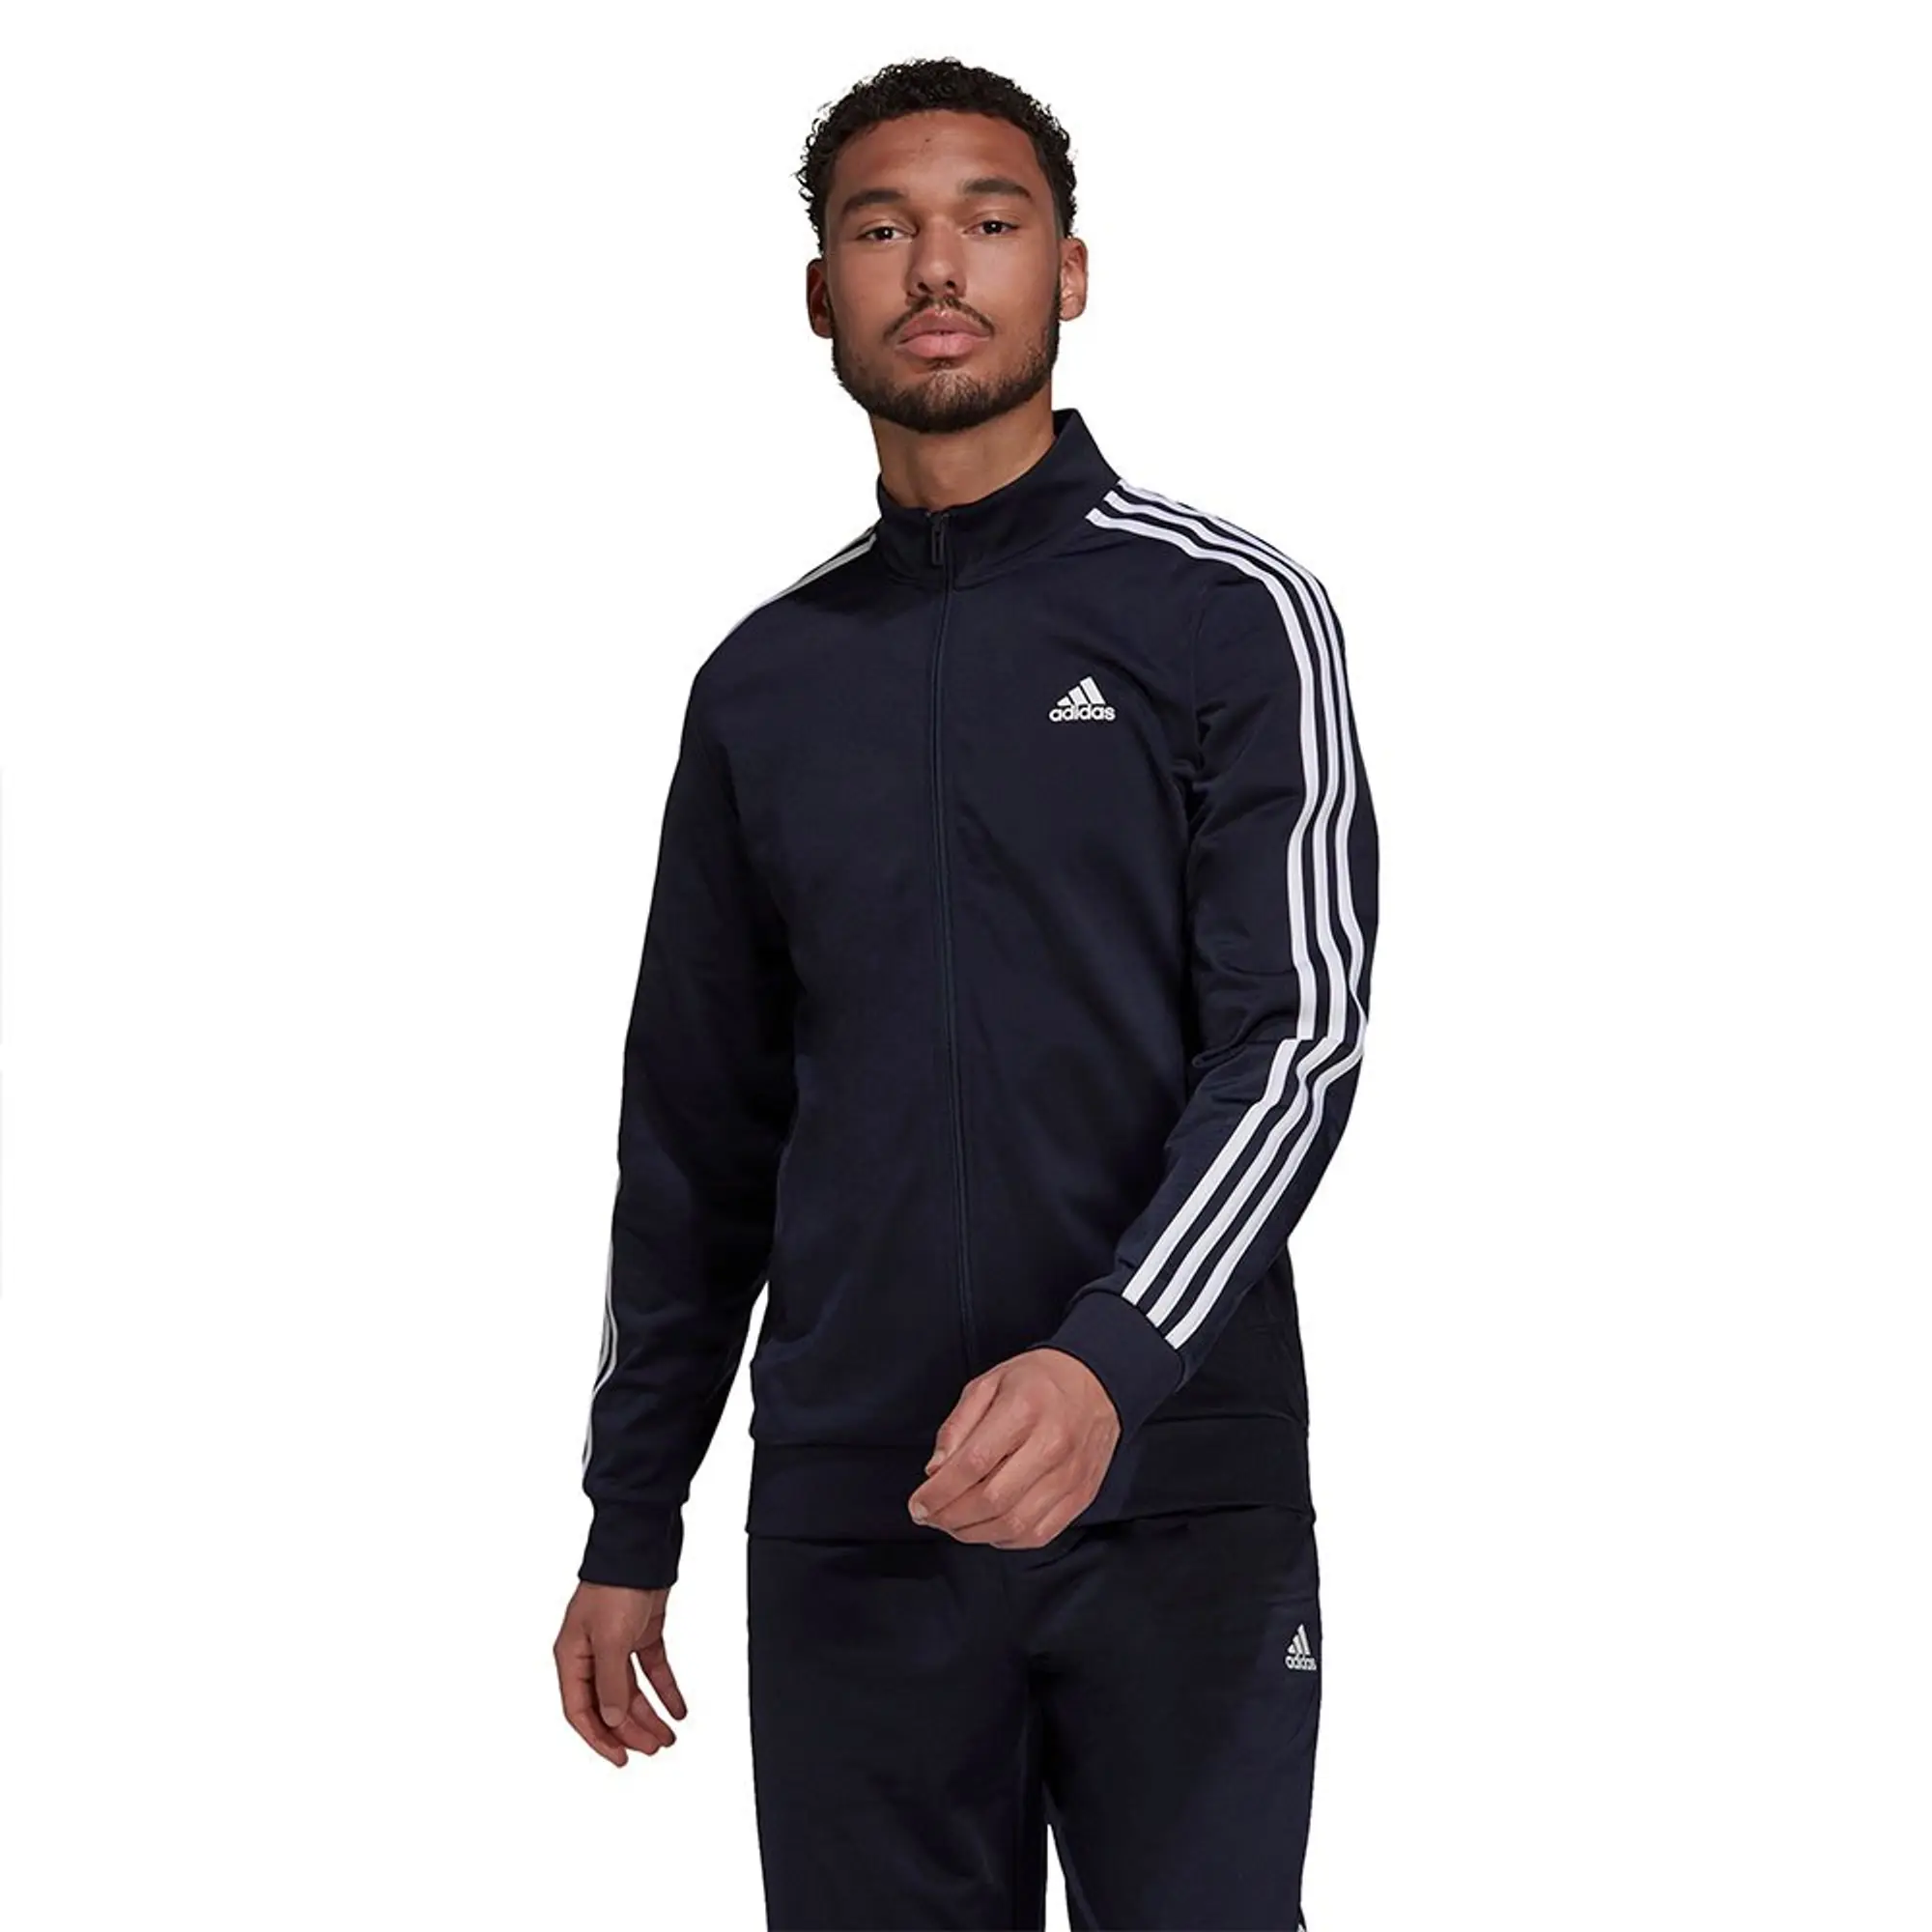 Adidas Sportswear 3 Stripes Tt Jacket  - Black